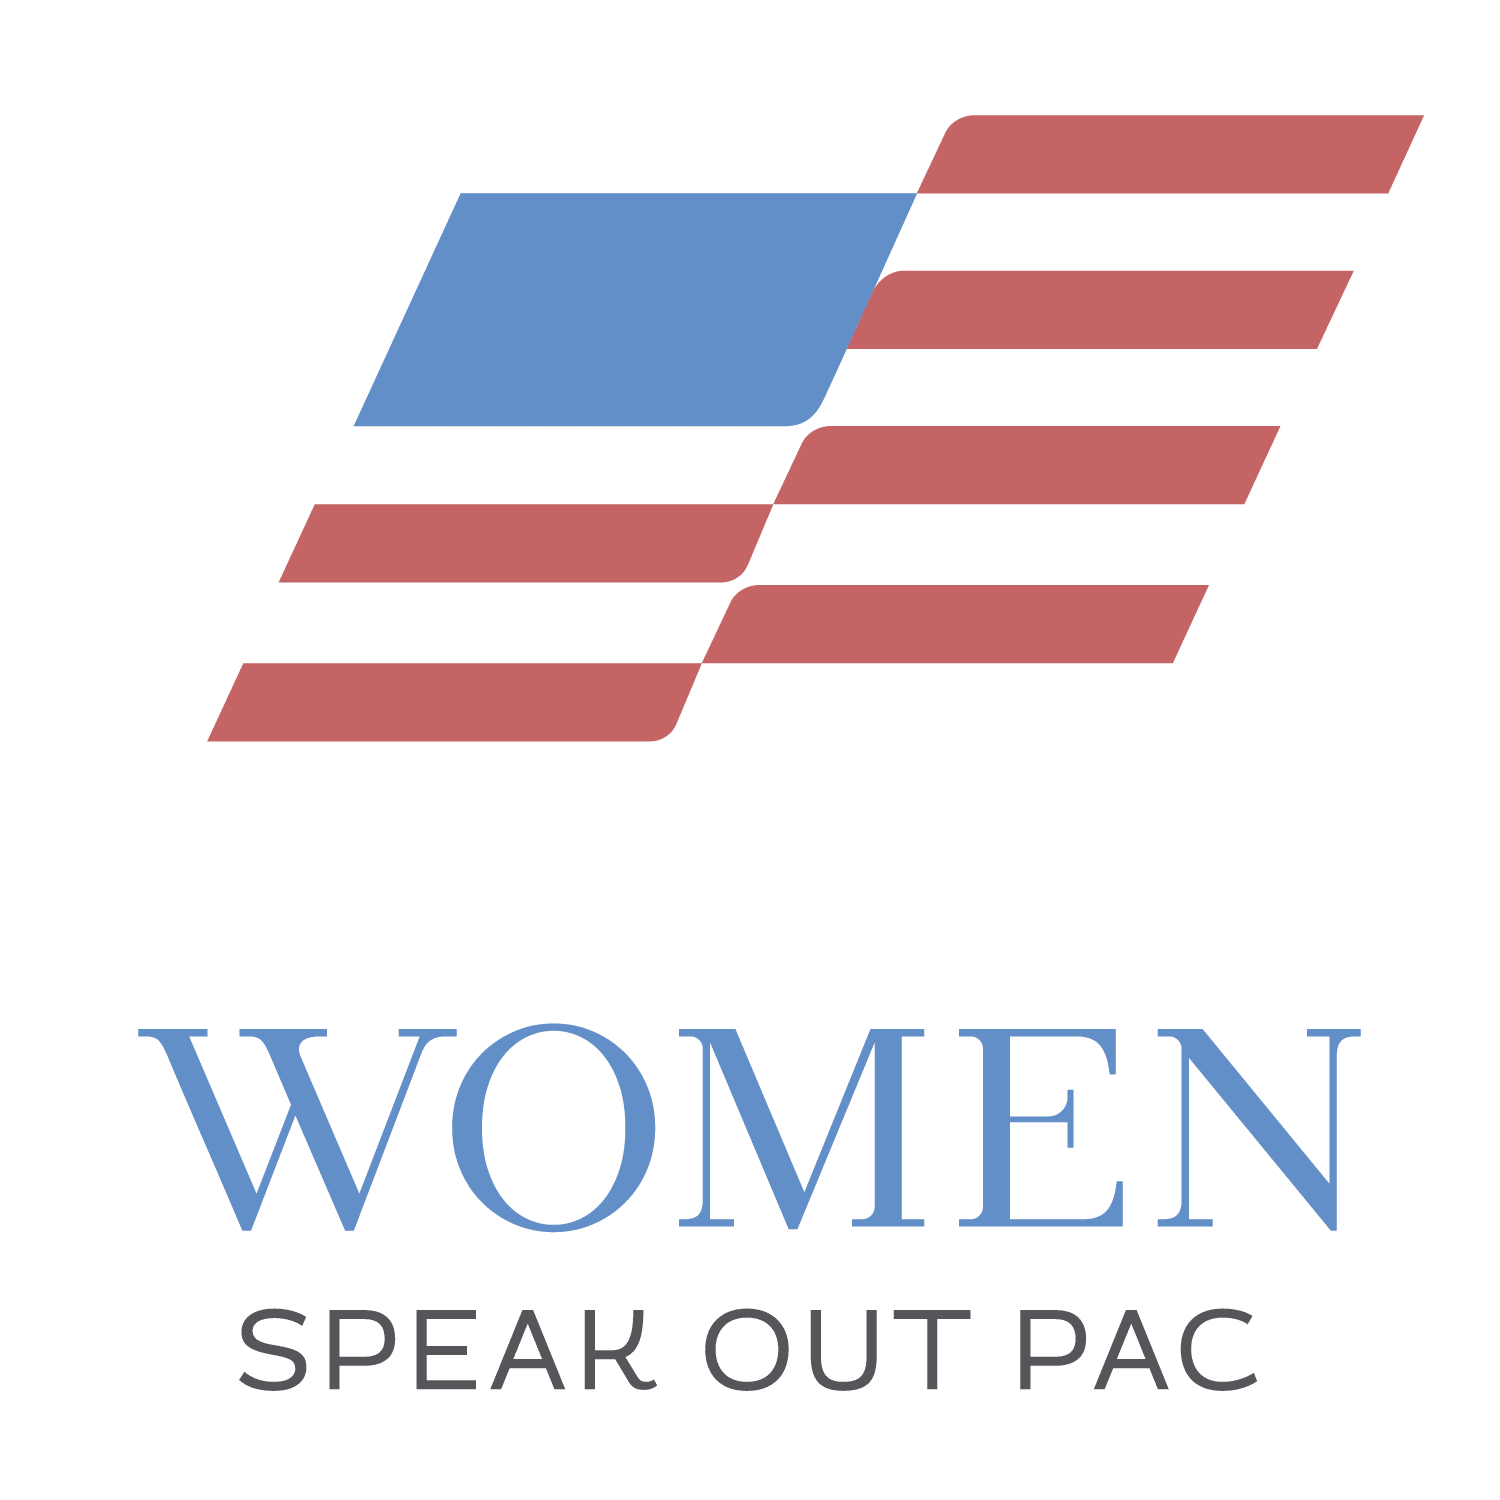 Women Speak Out PAC